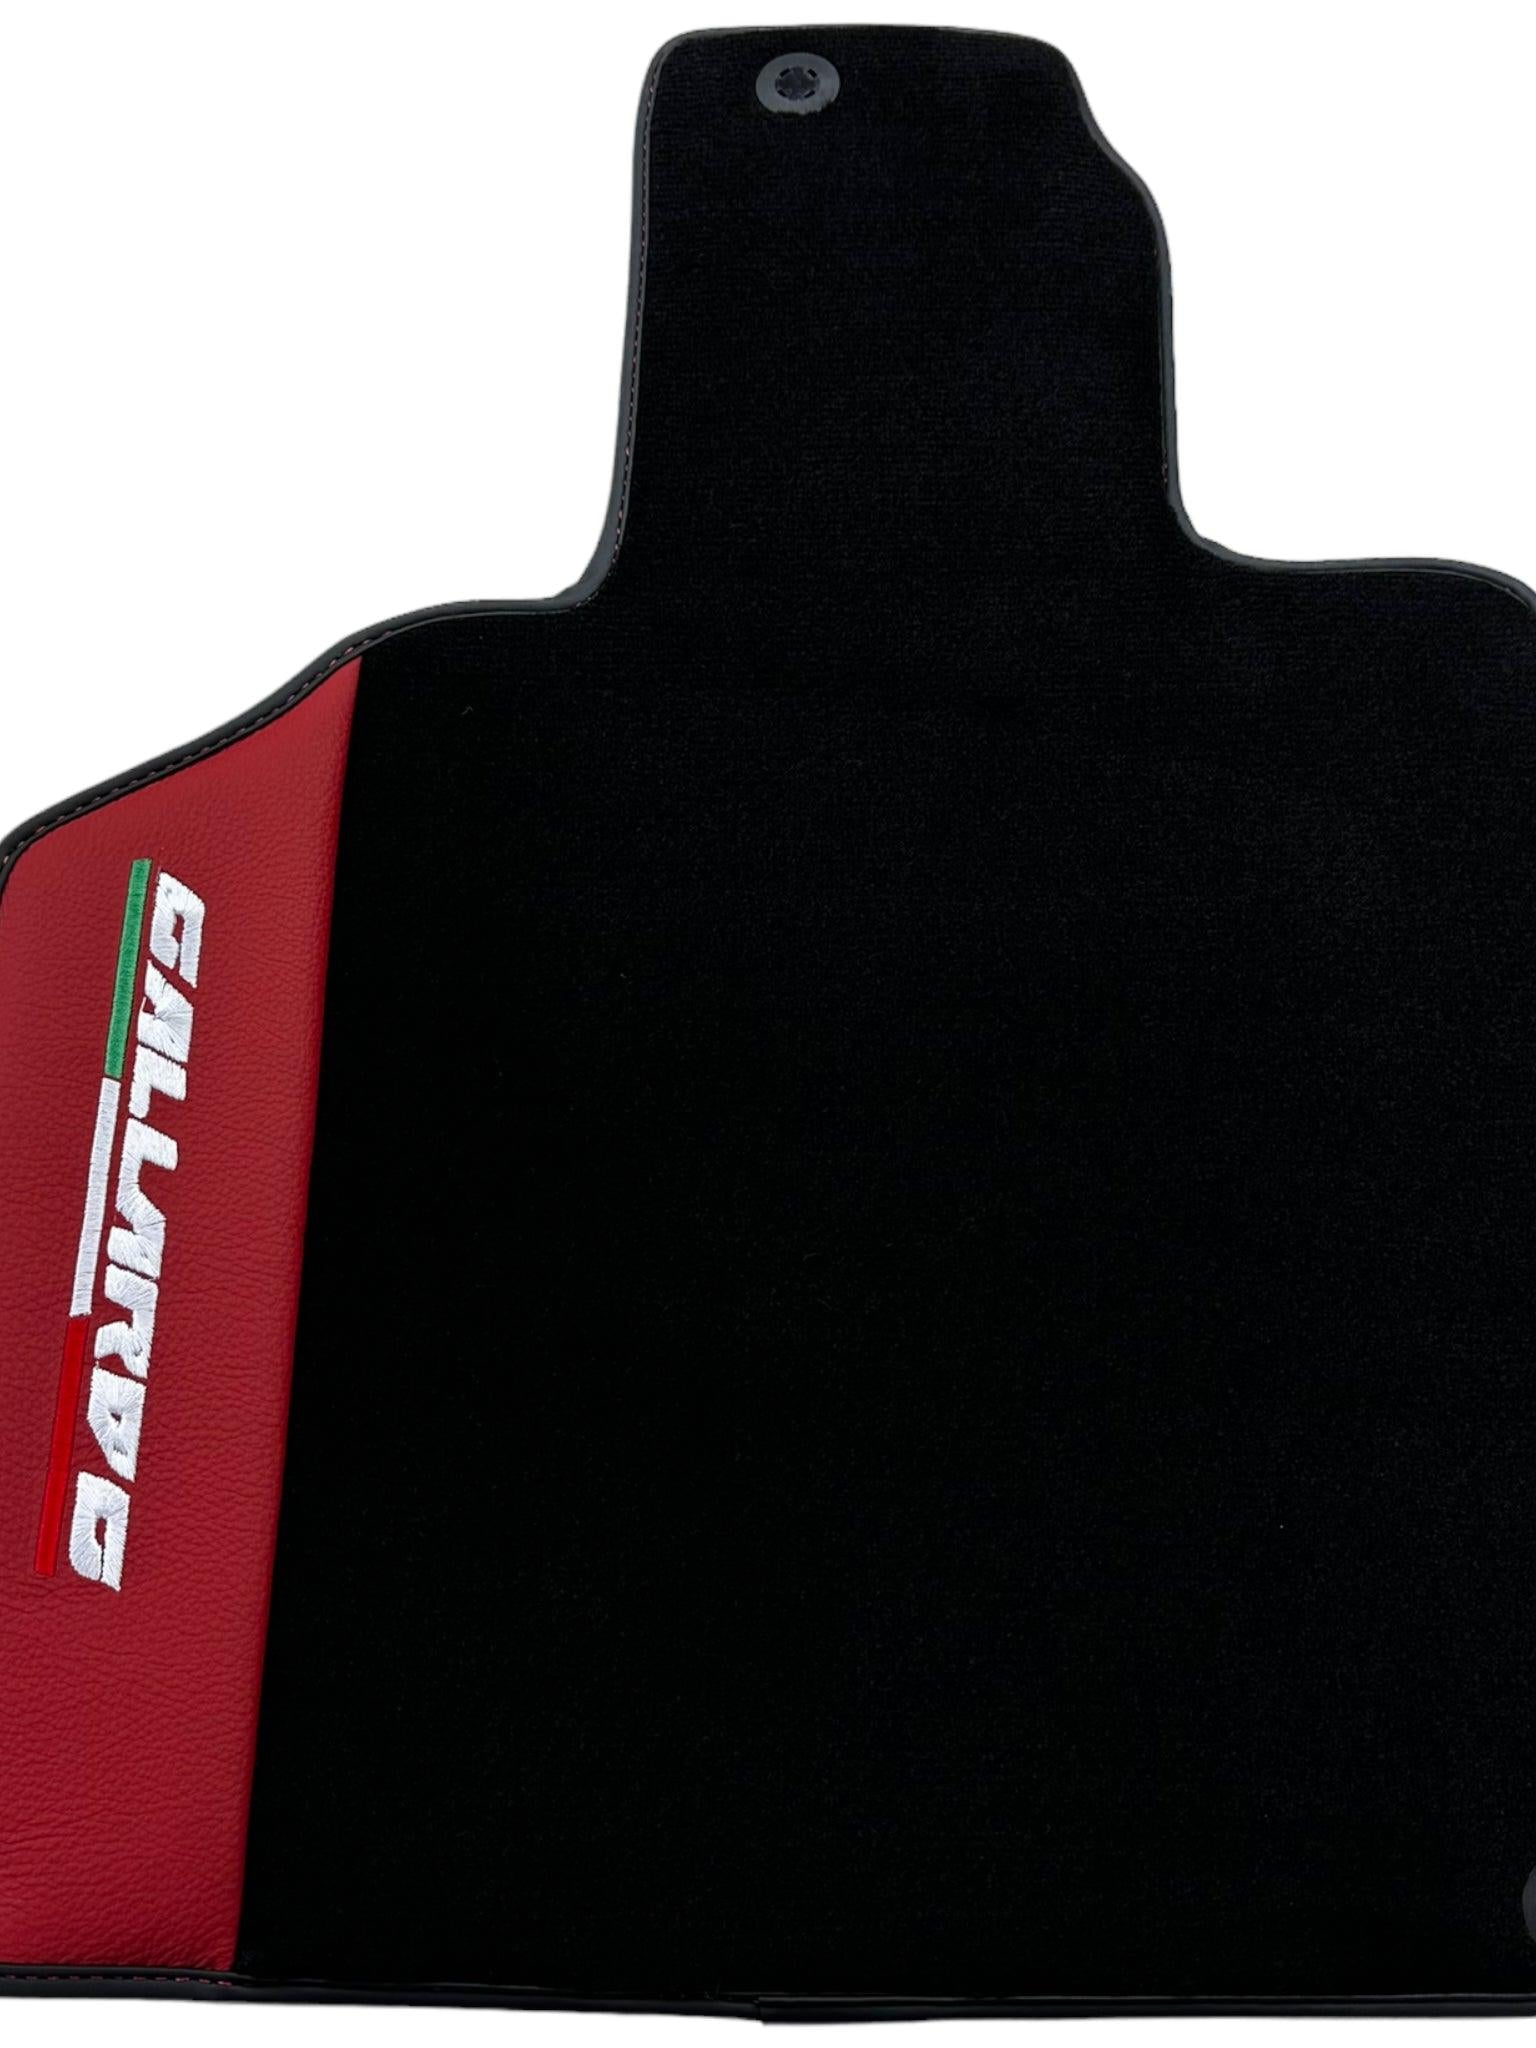 Black Floor Mats for Lamborghini Gallardo With Red Leather - AutoWin